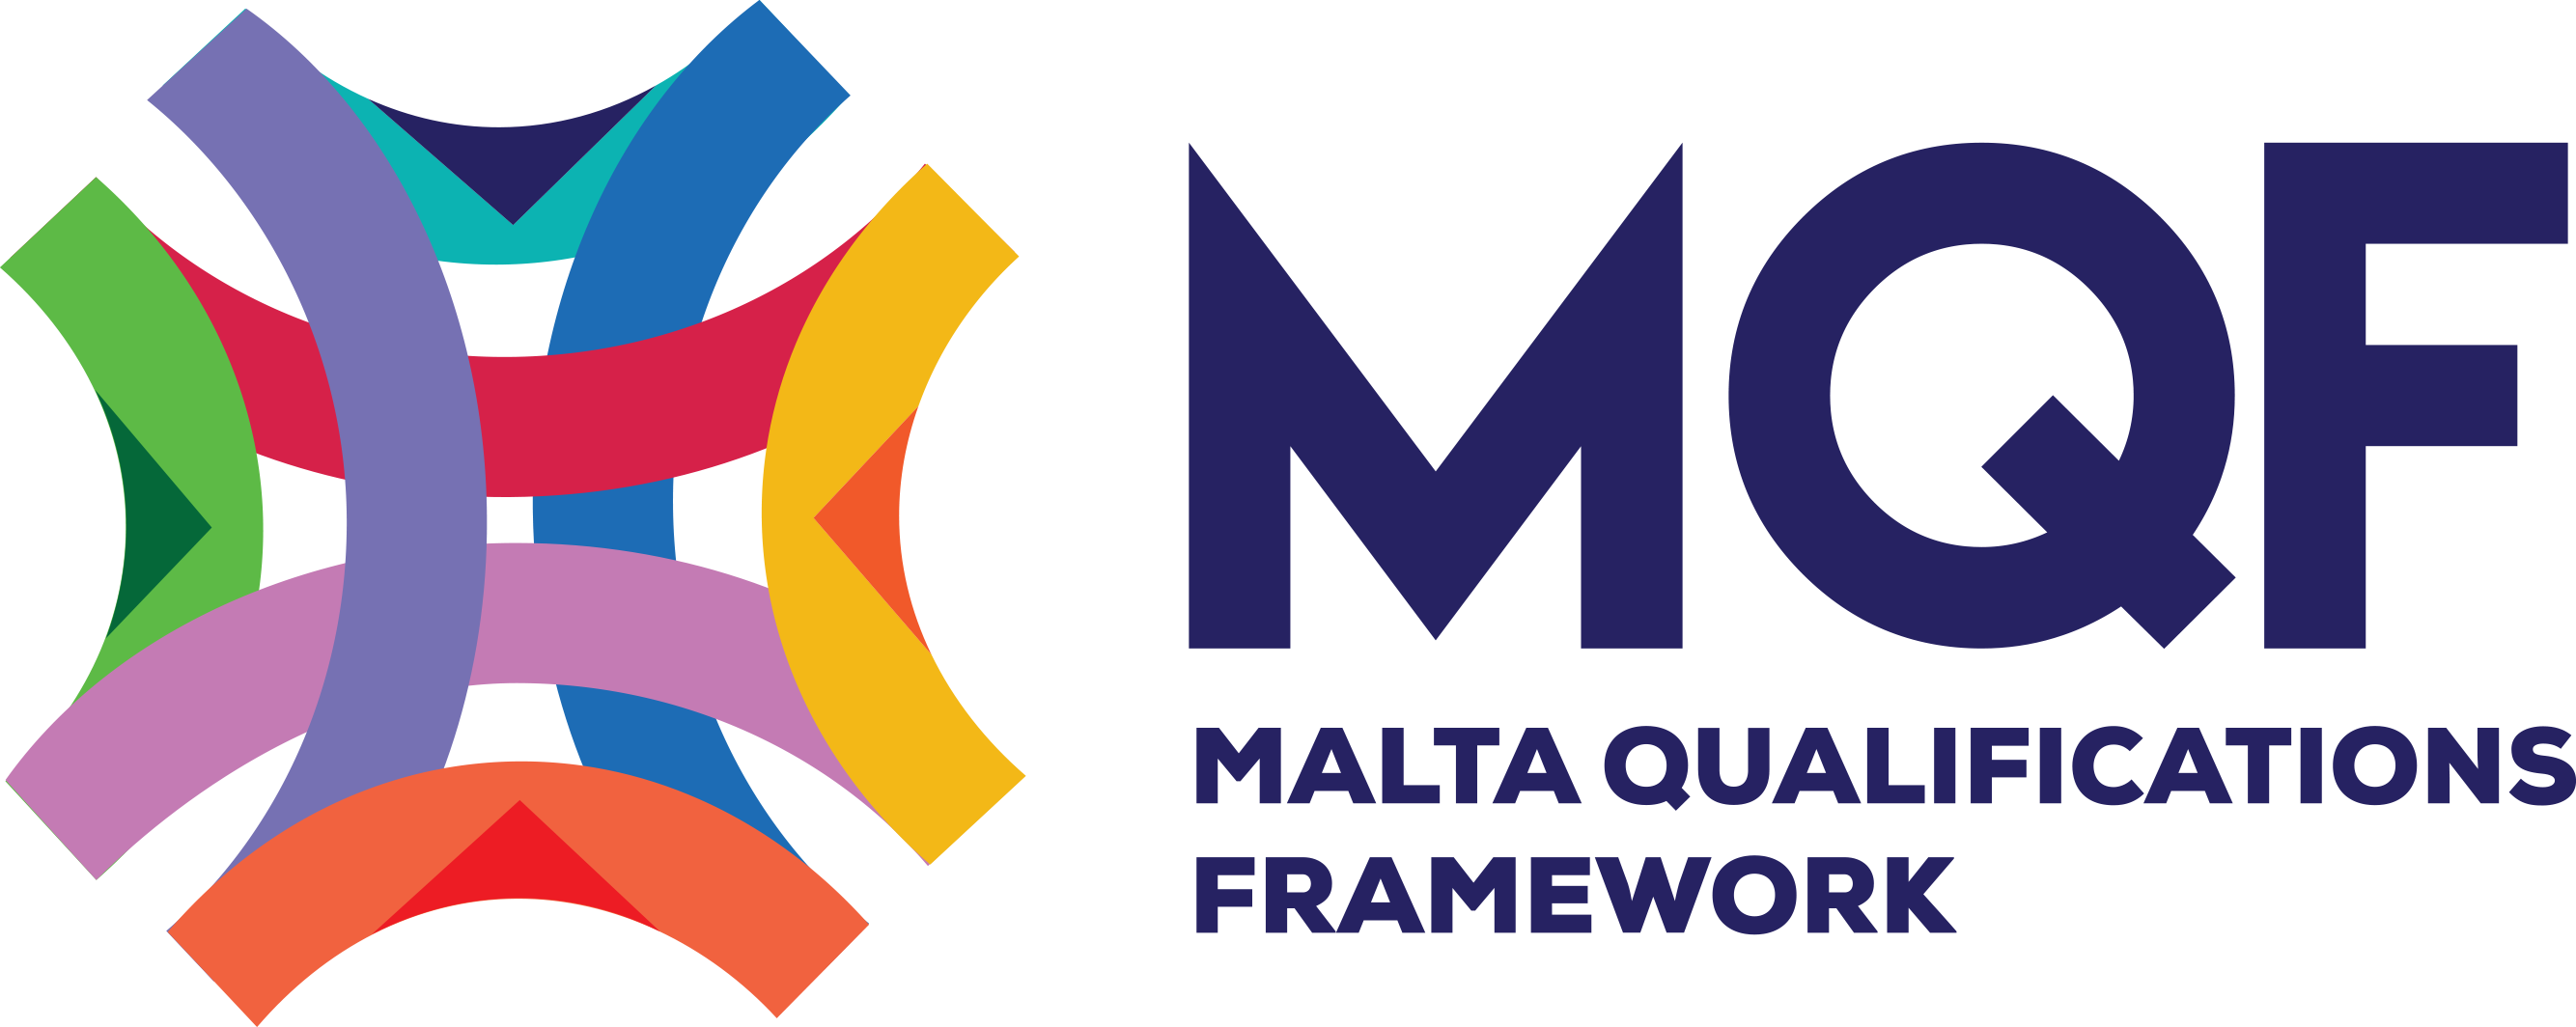 malta qualifications framework